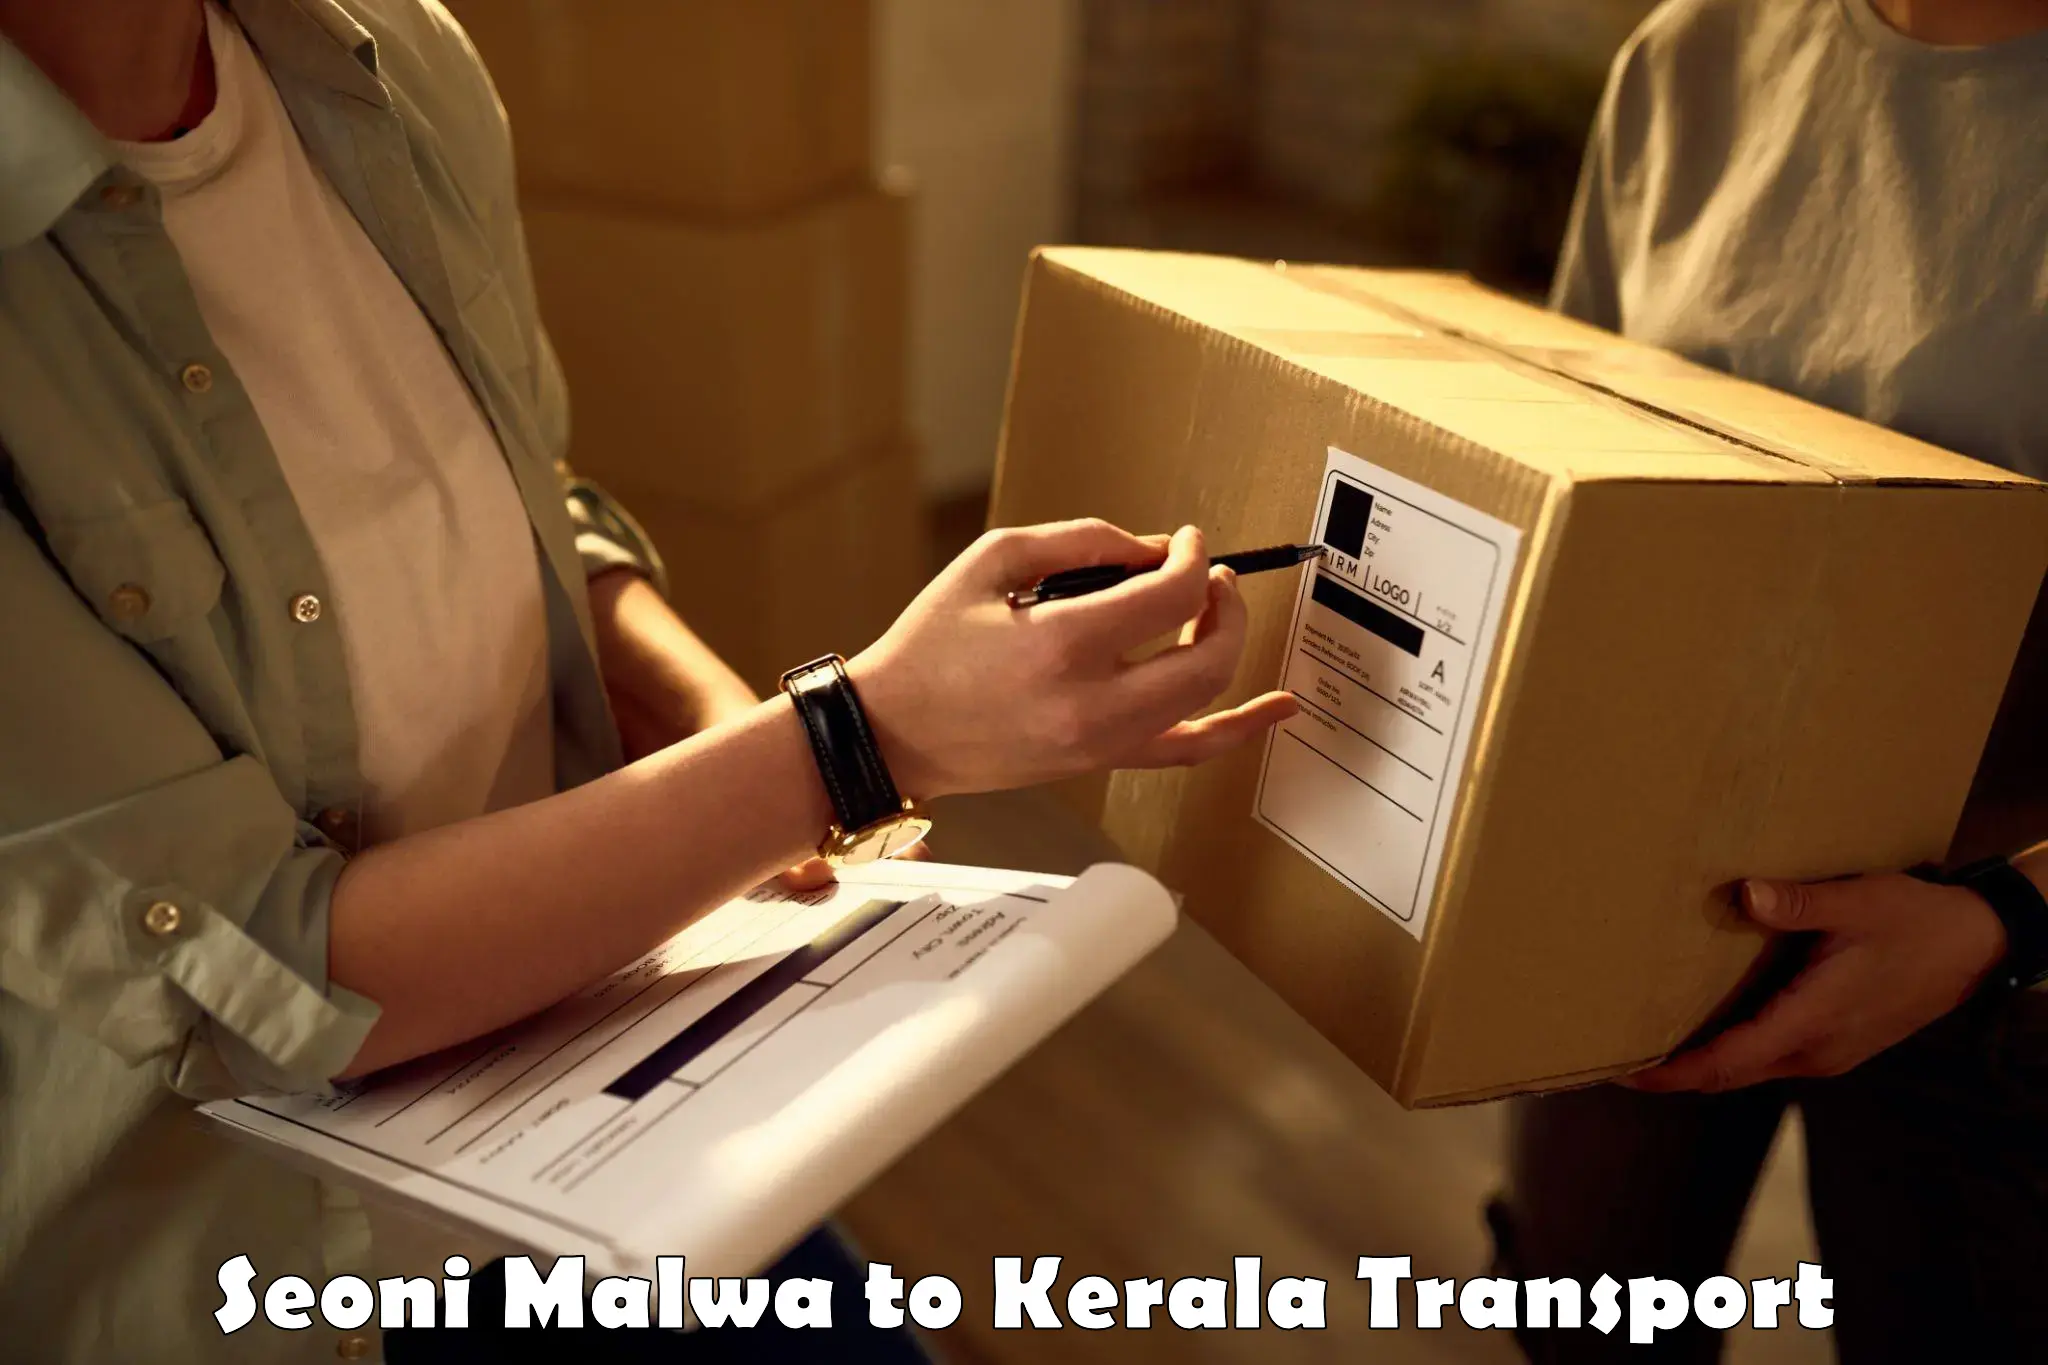 Container transport service Seoni Malwa to Ernakulam